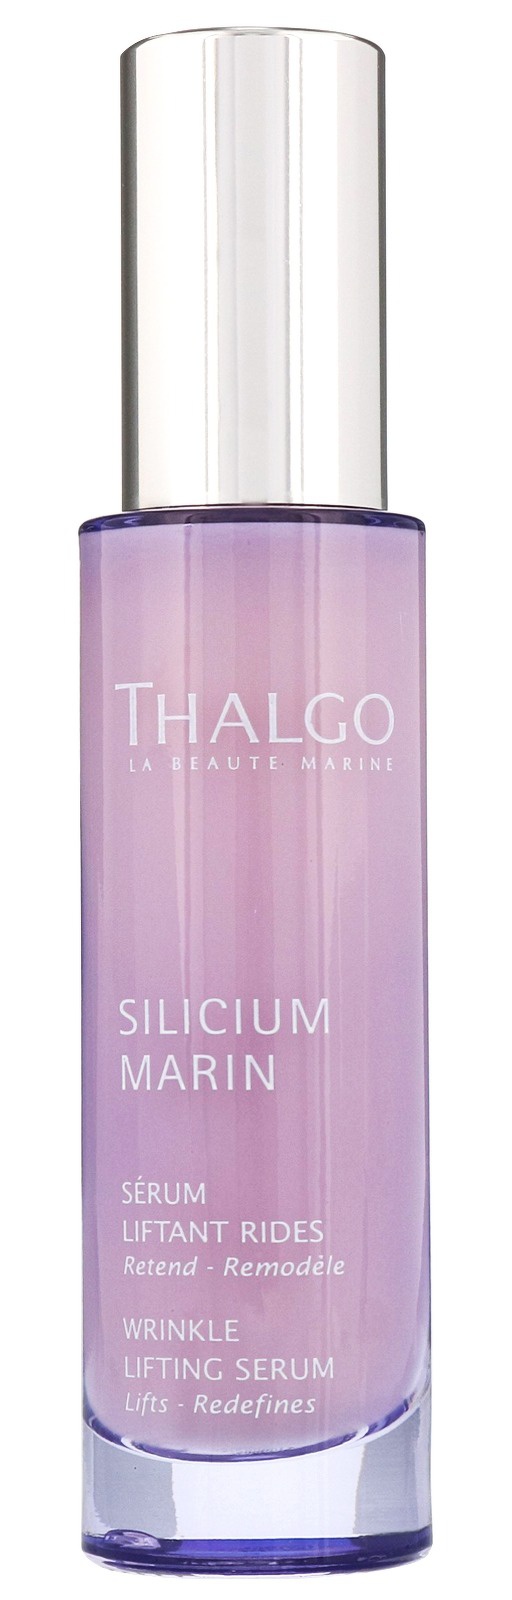 Thalgo Wrinkle Lifting Serum